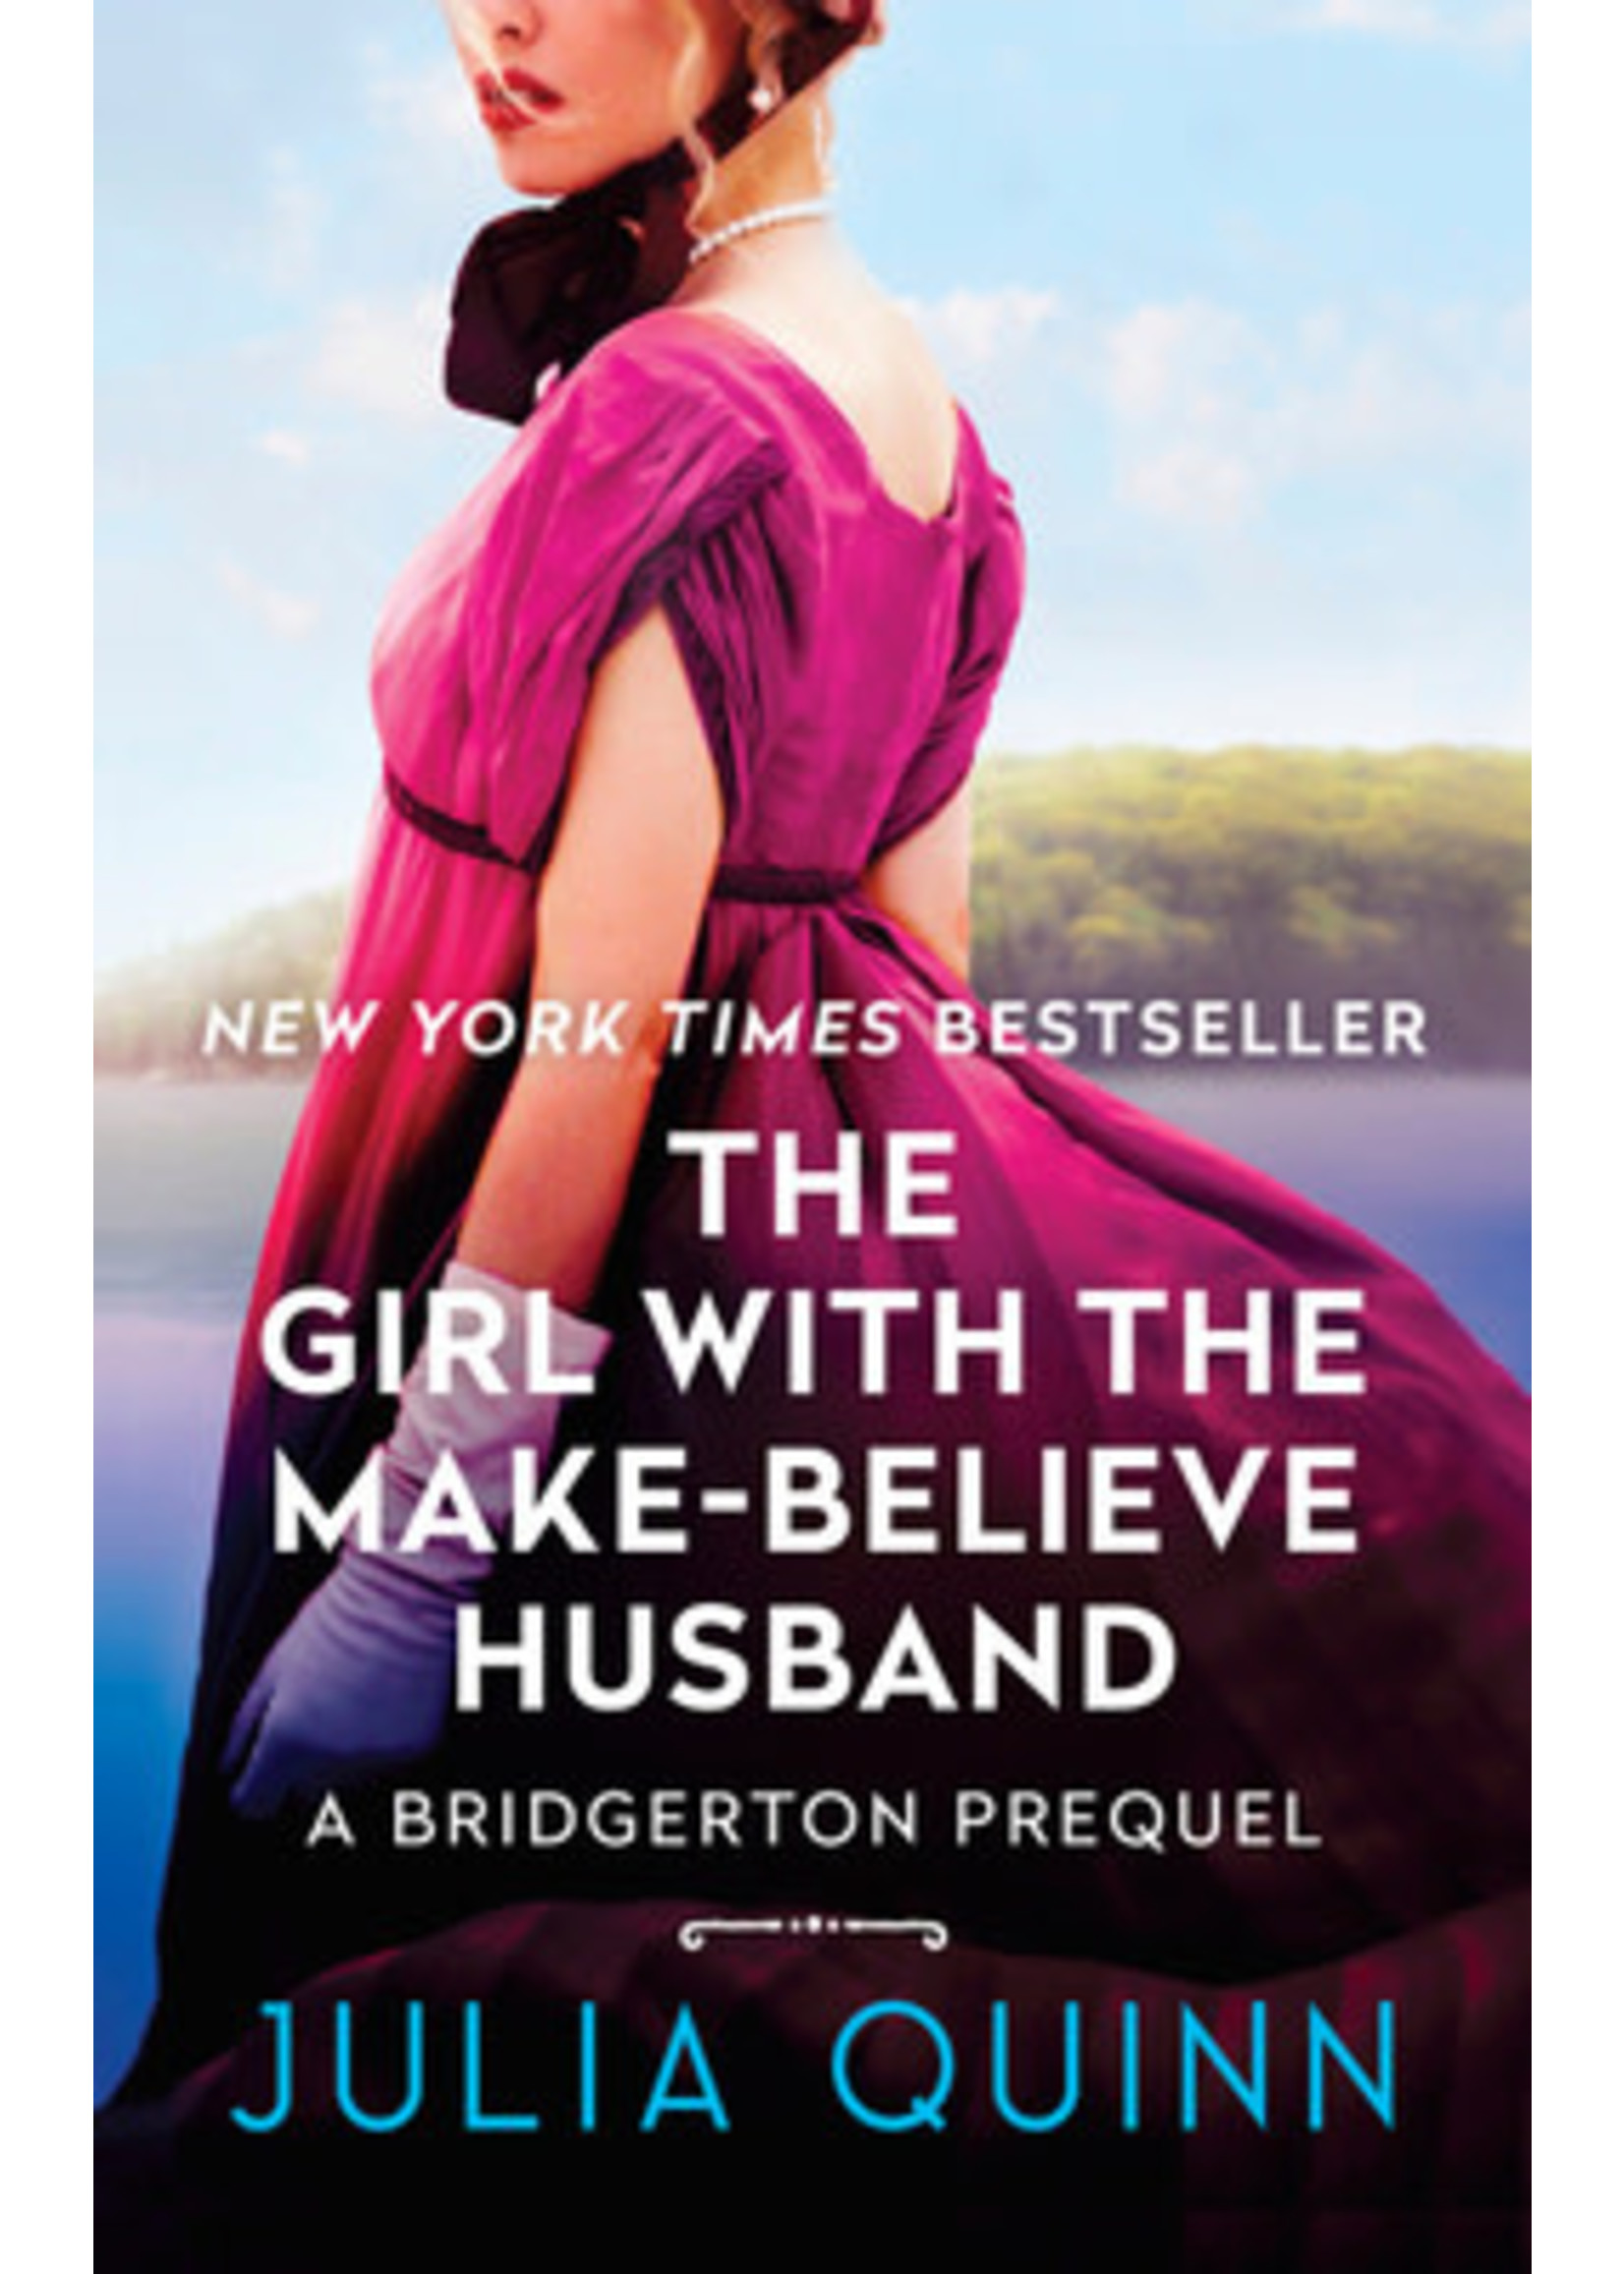 The Girl With The Make-Believe Husband: A Bridgerton Prequel by Julia Quinn